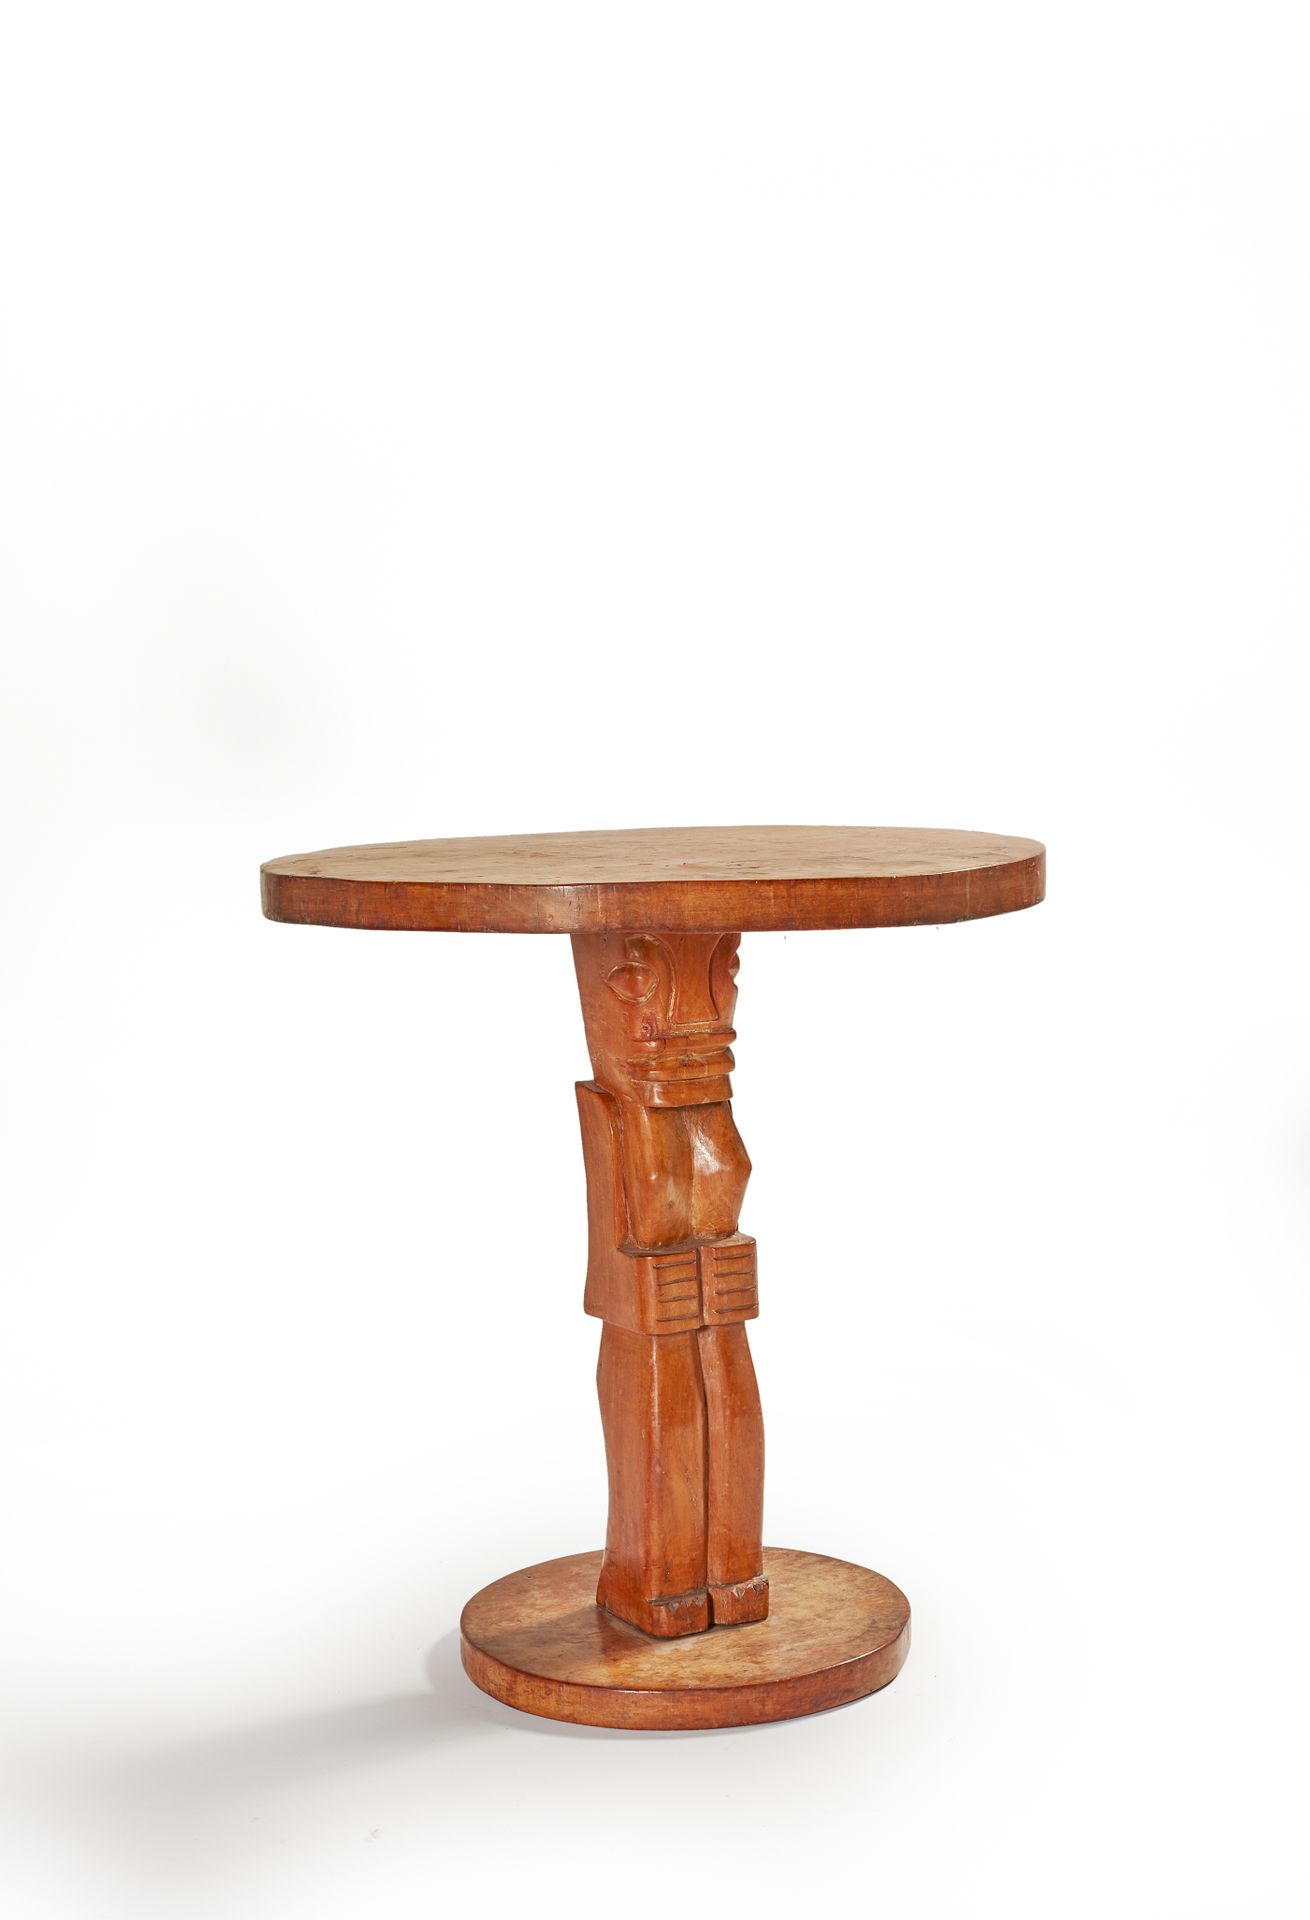 Null 雕刻的木制基座桌，底座为拟人化，显示一个非洲人。

20世纪。

高度44.5 - 深度42厘米